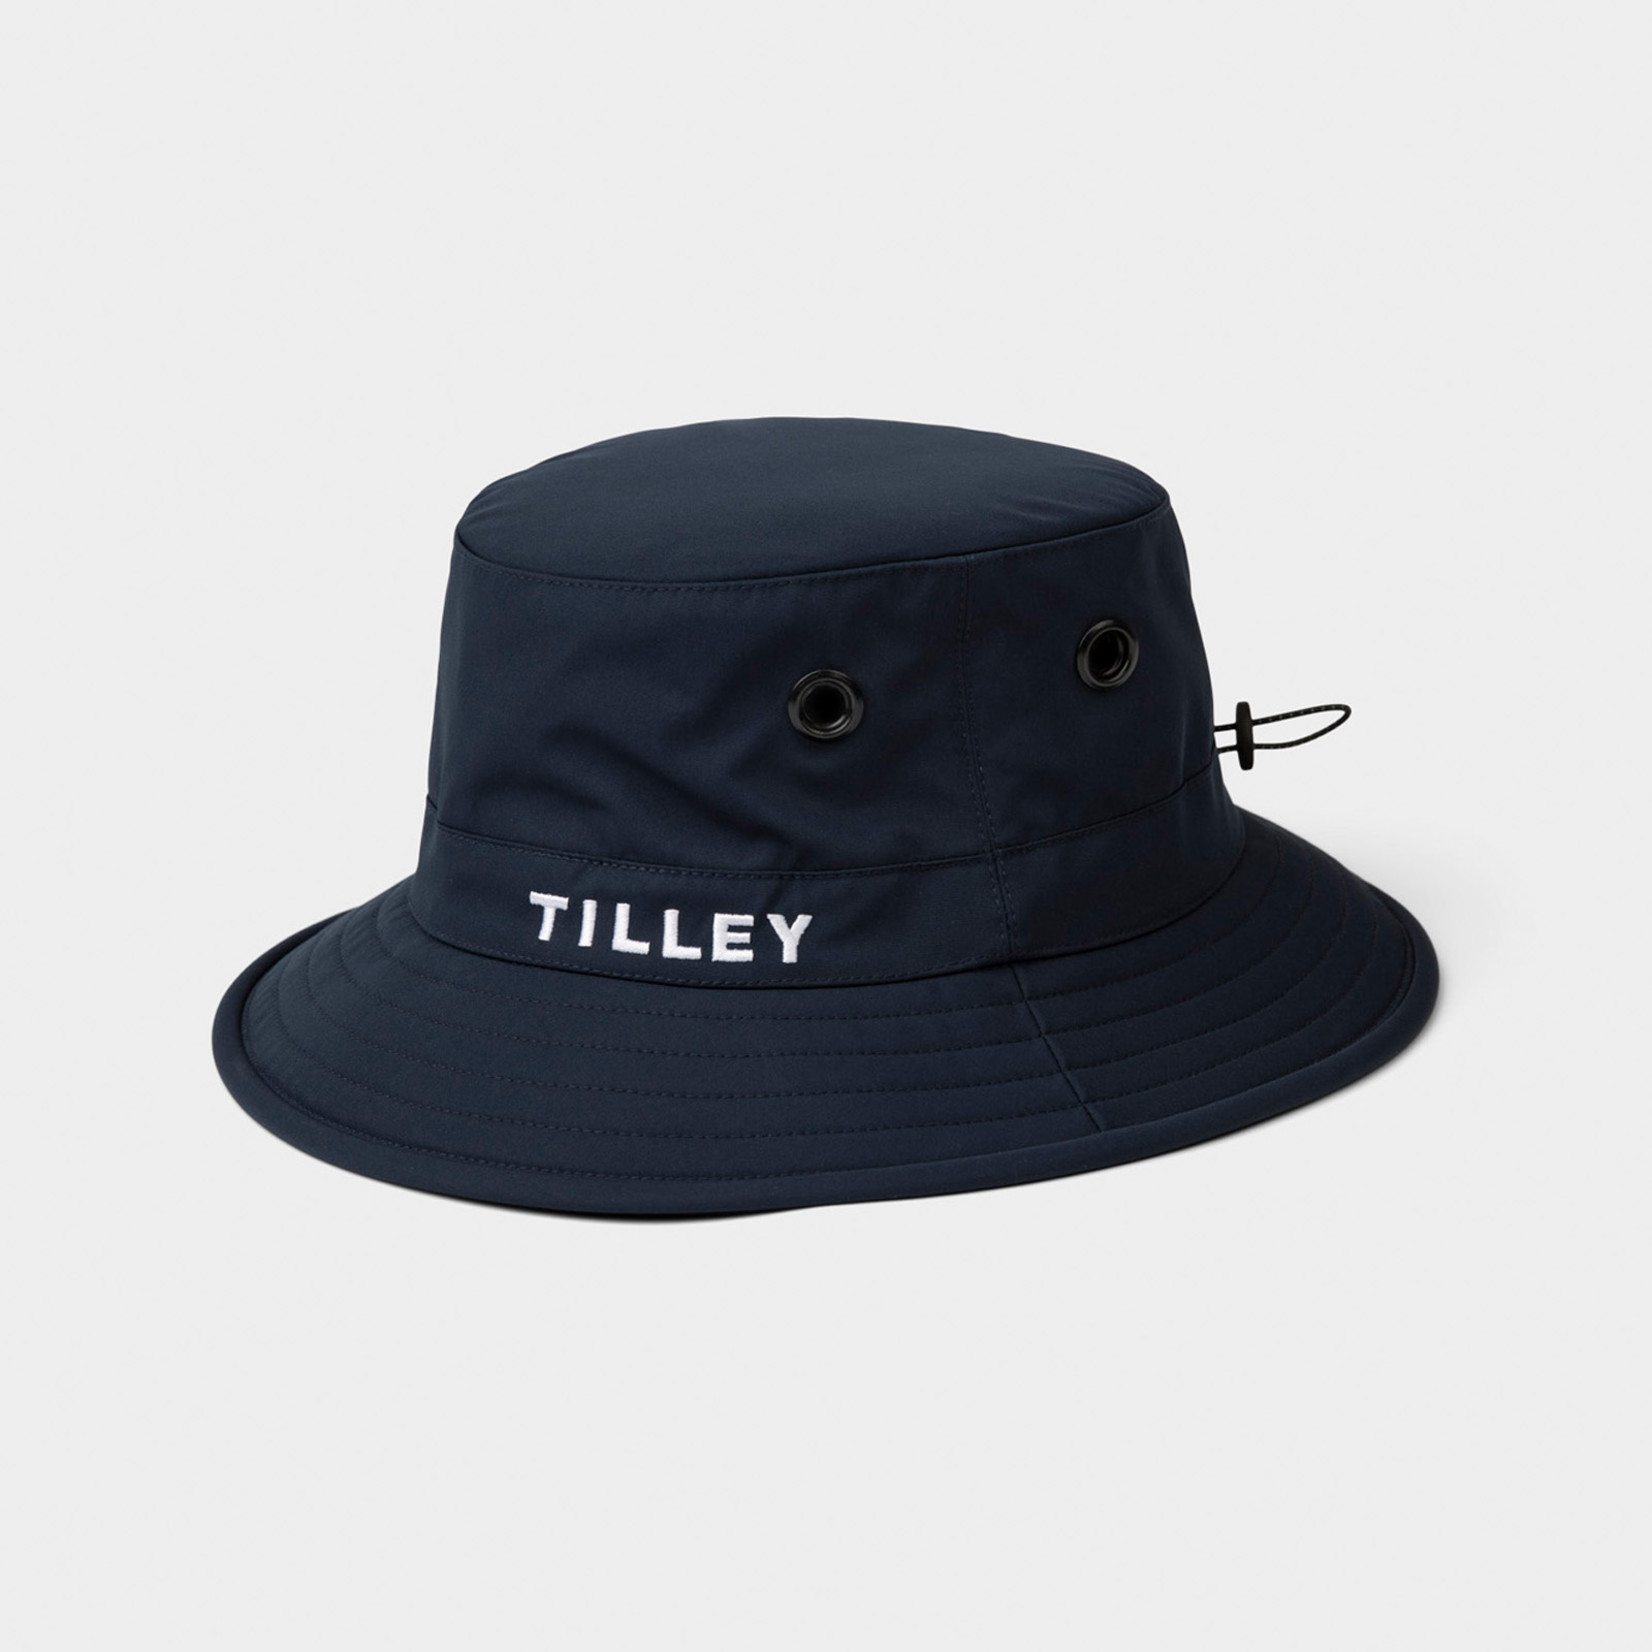 TILLEY ENDURABLES GOLF BUCKET HAT